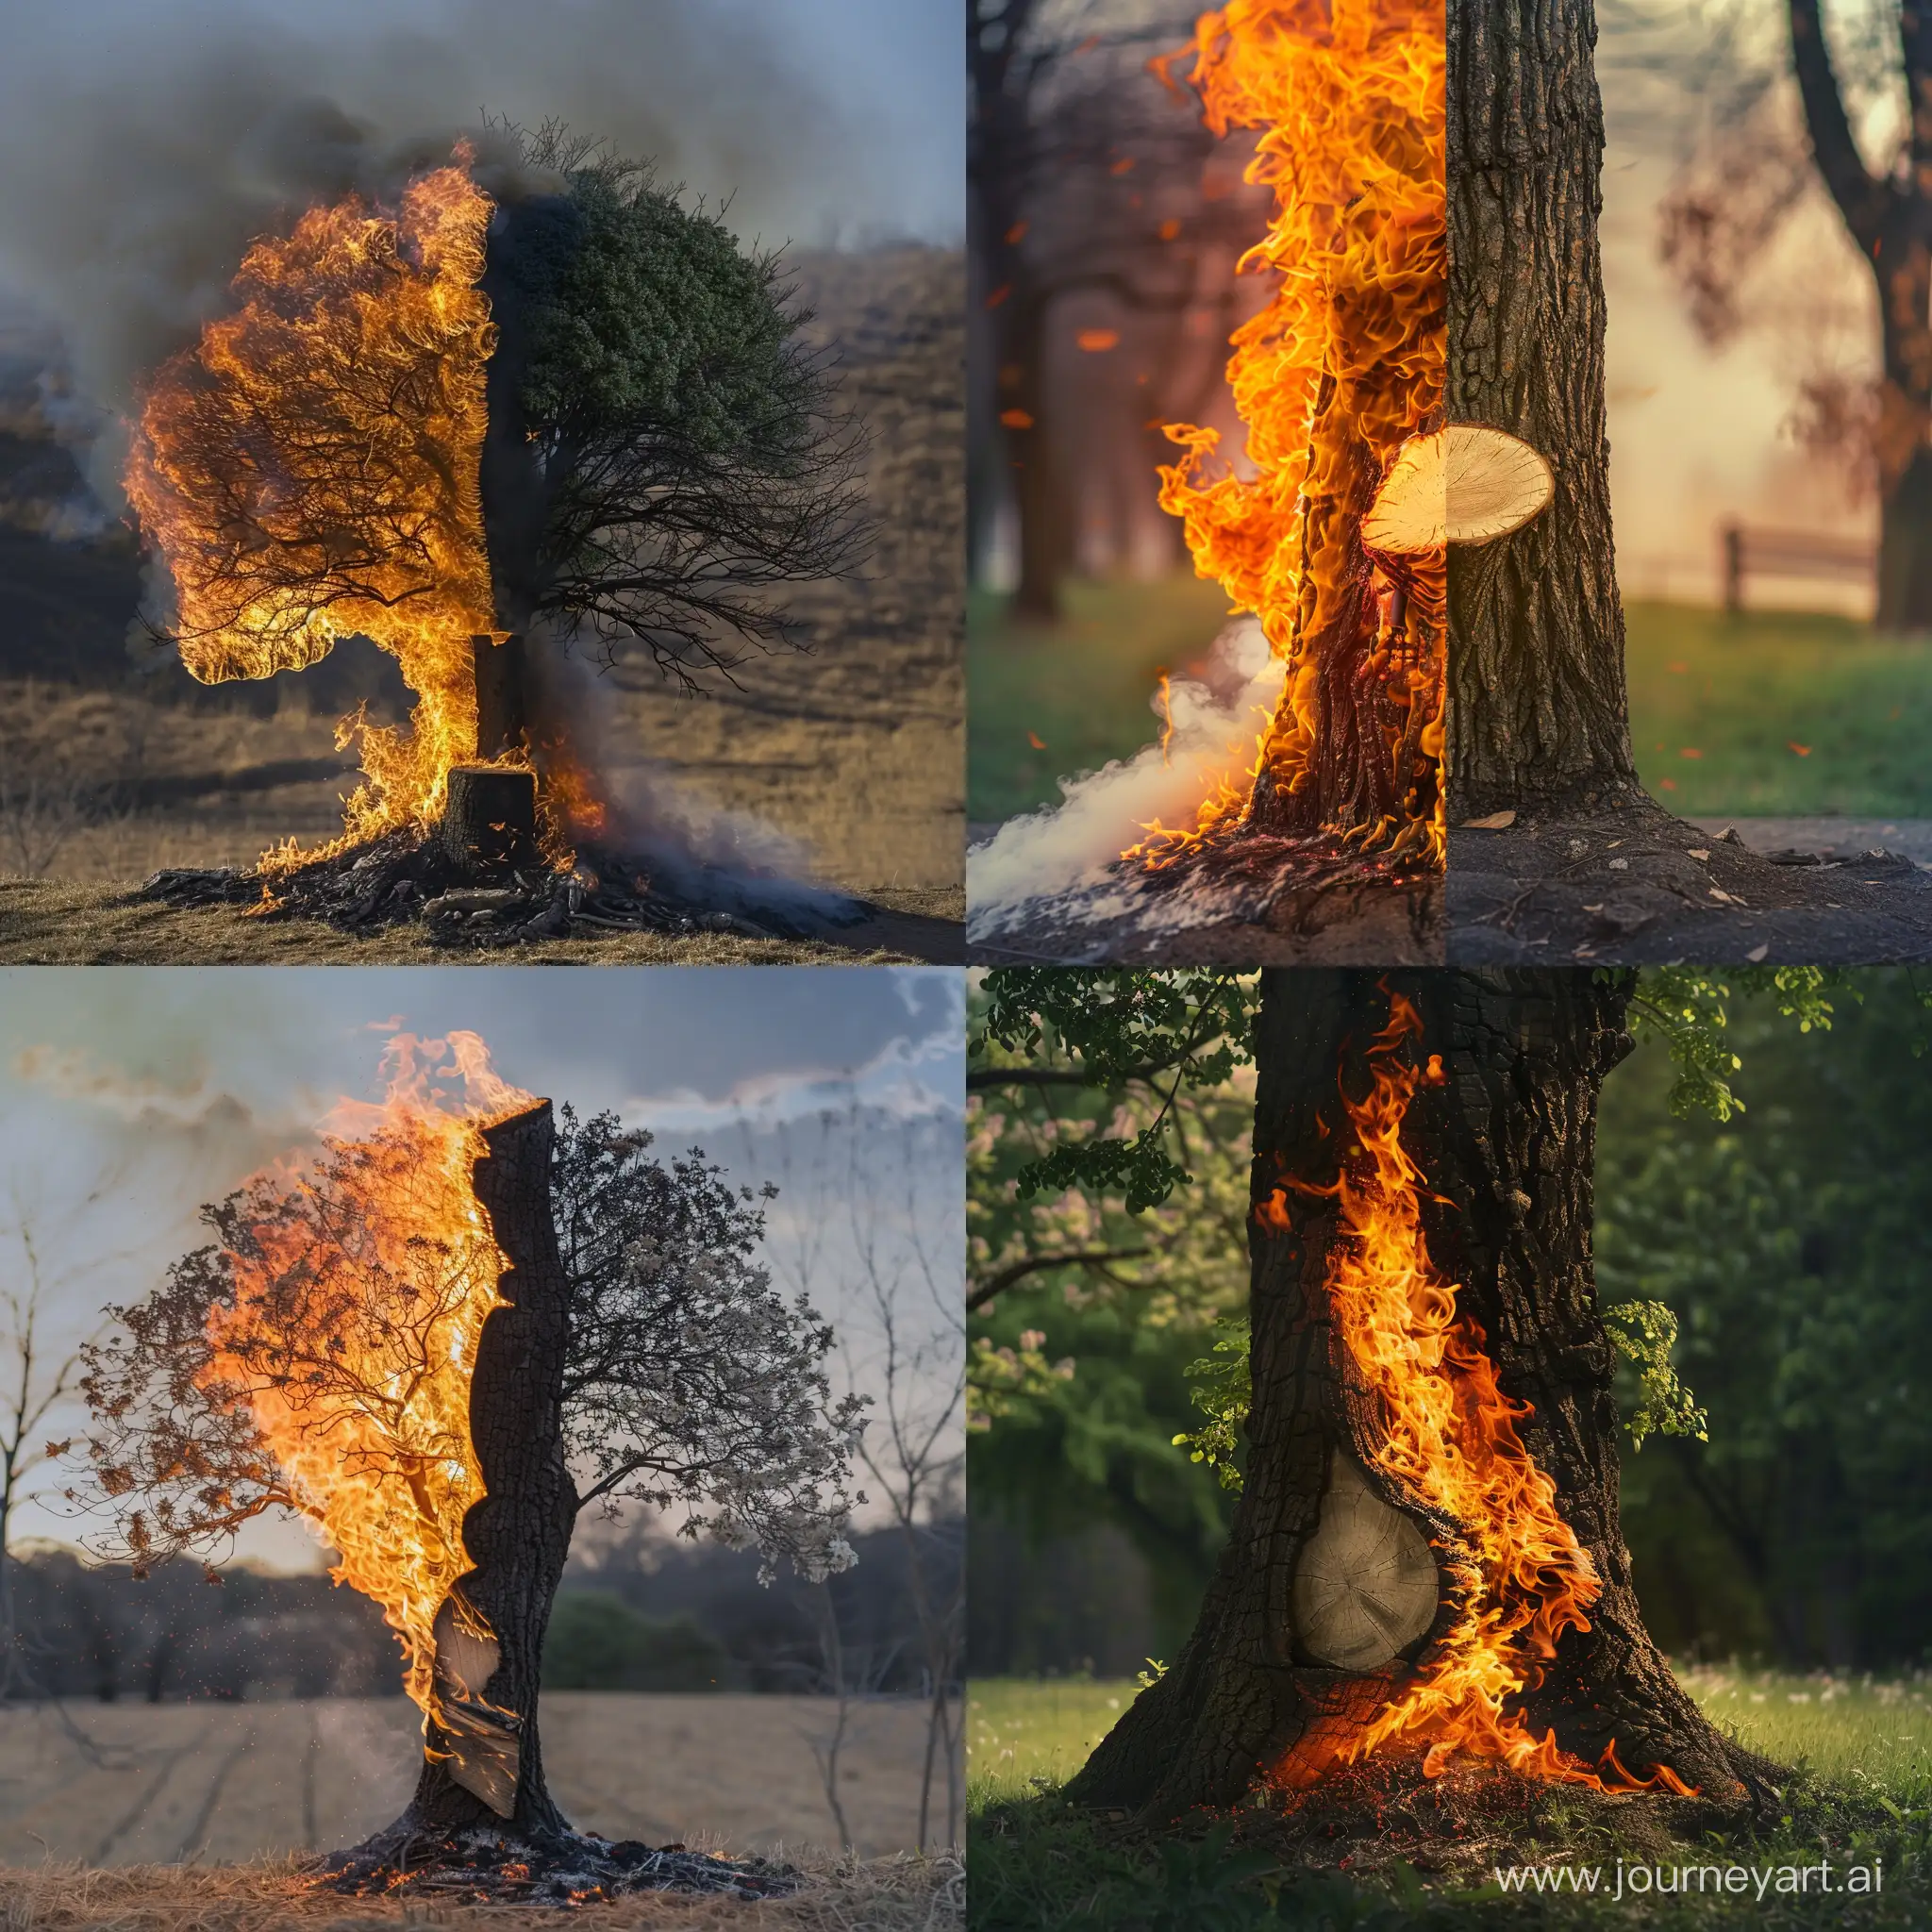 Contrasting-Tree-Burning-Half-Unburnable-Stump